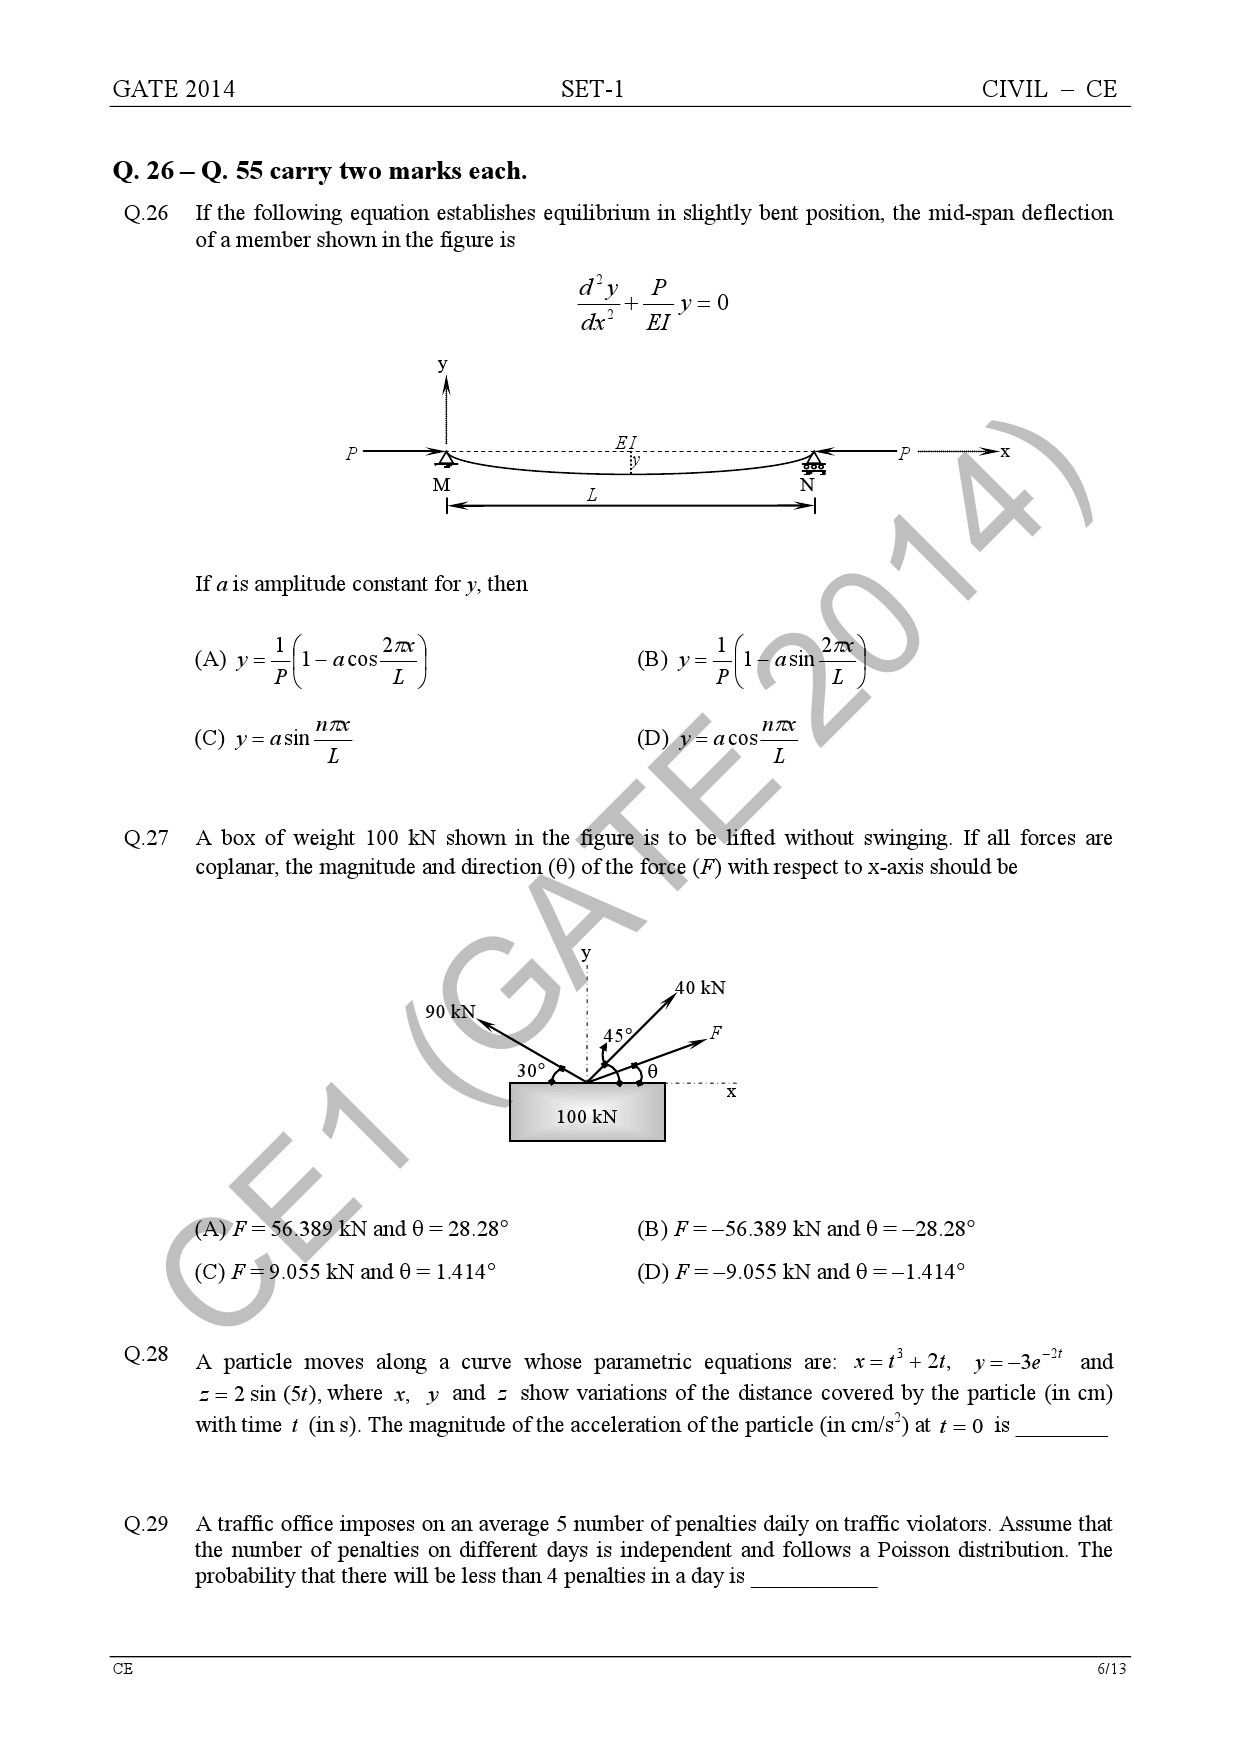 GATE Exam Question Paper 2014 Civil Engineering Set 1 12